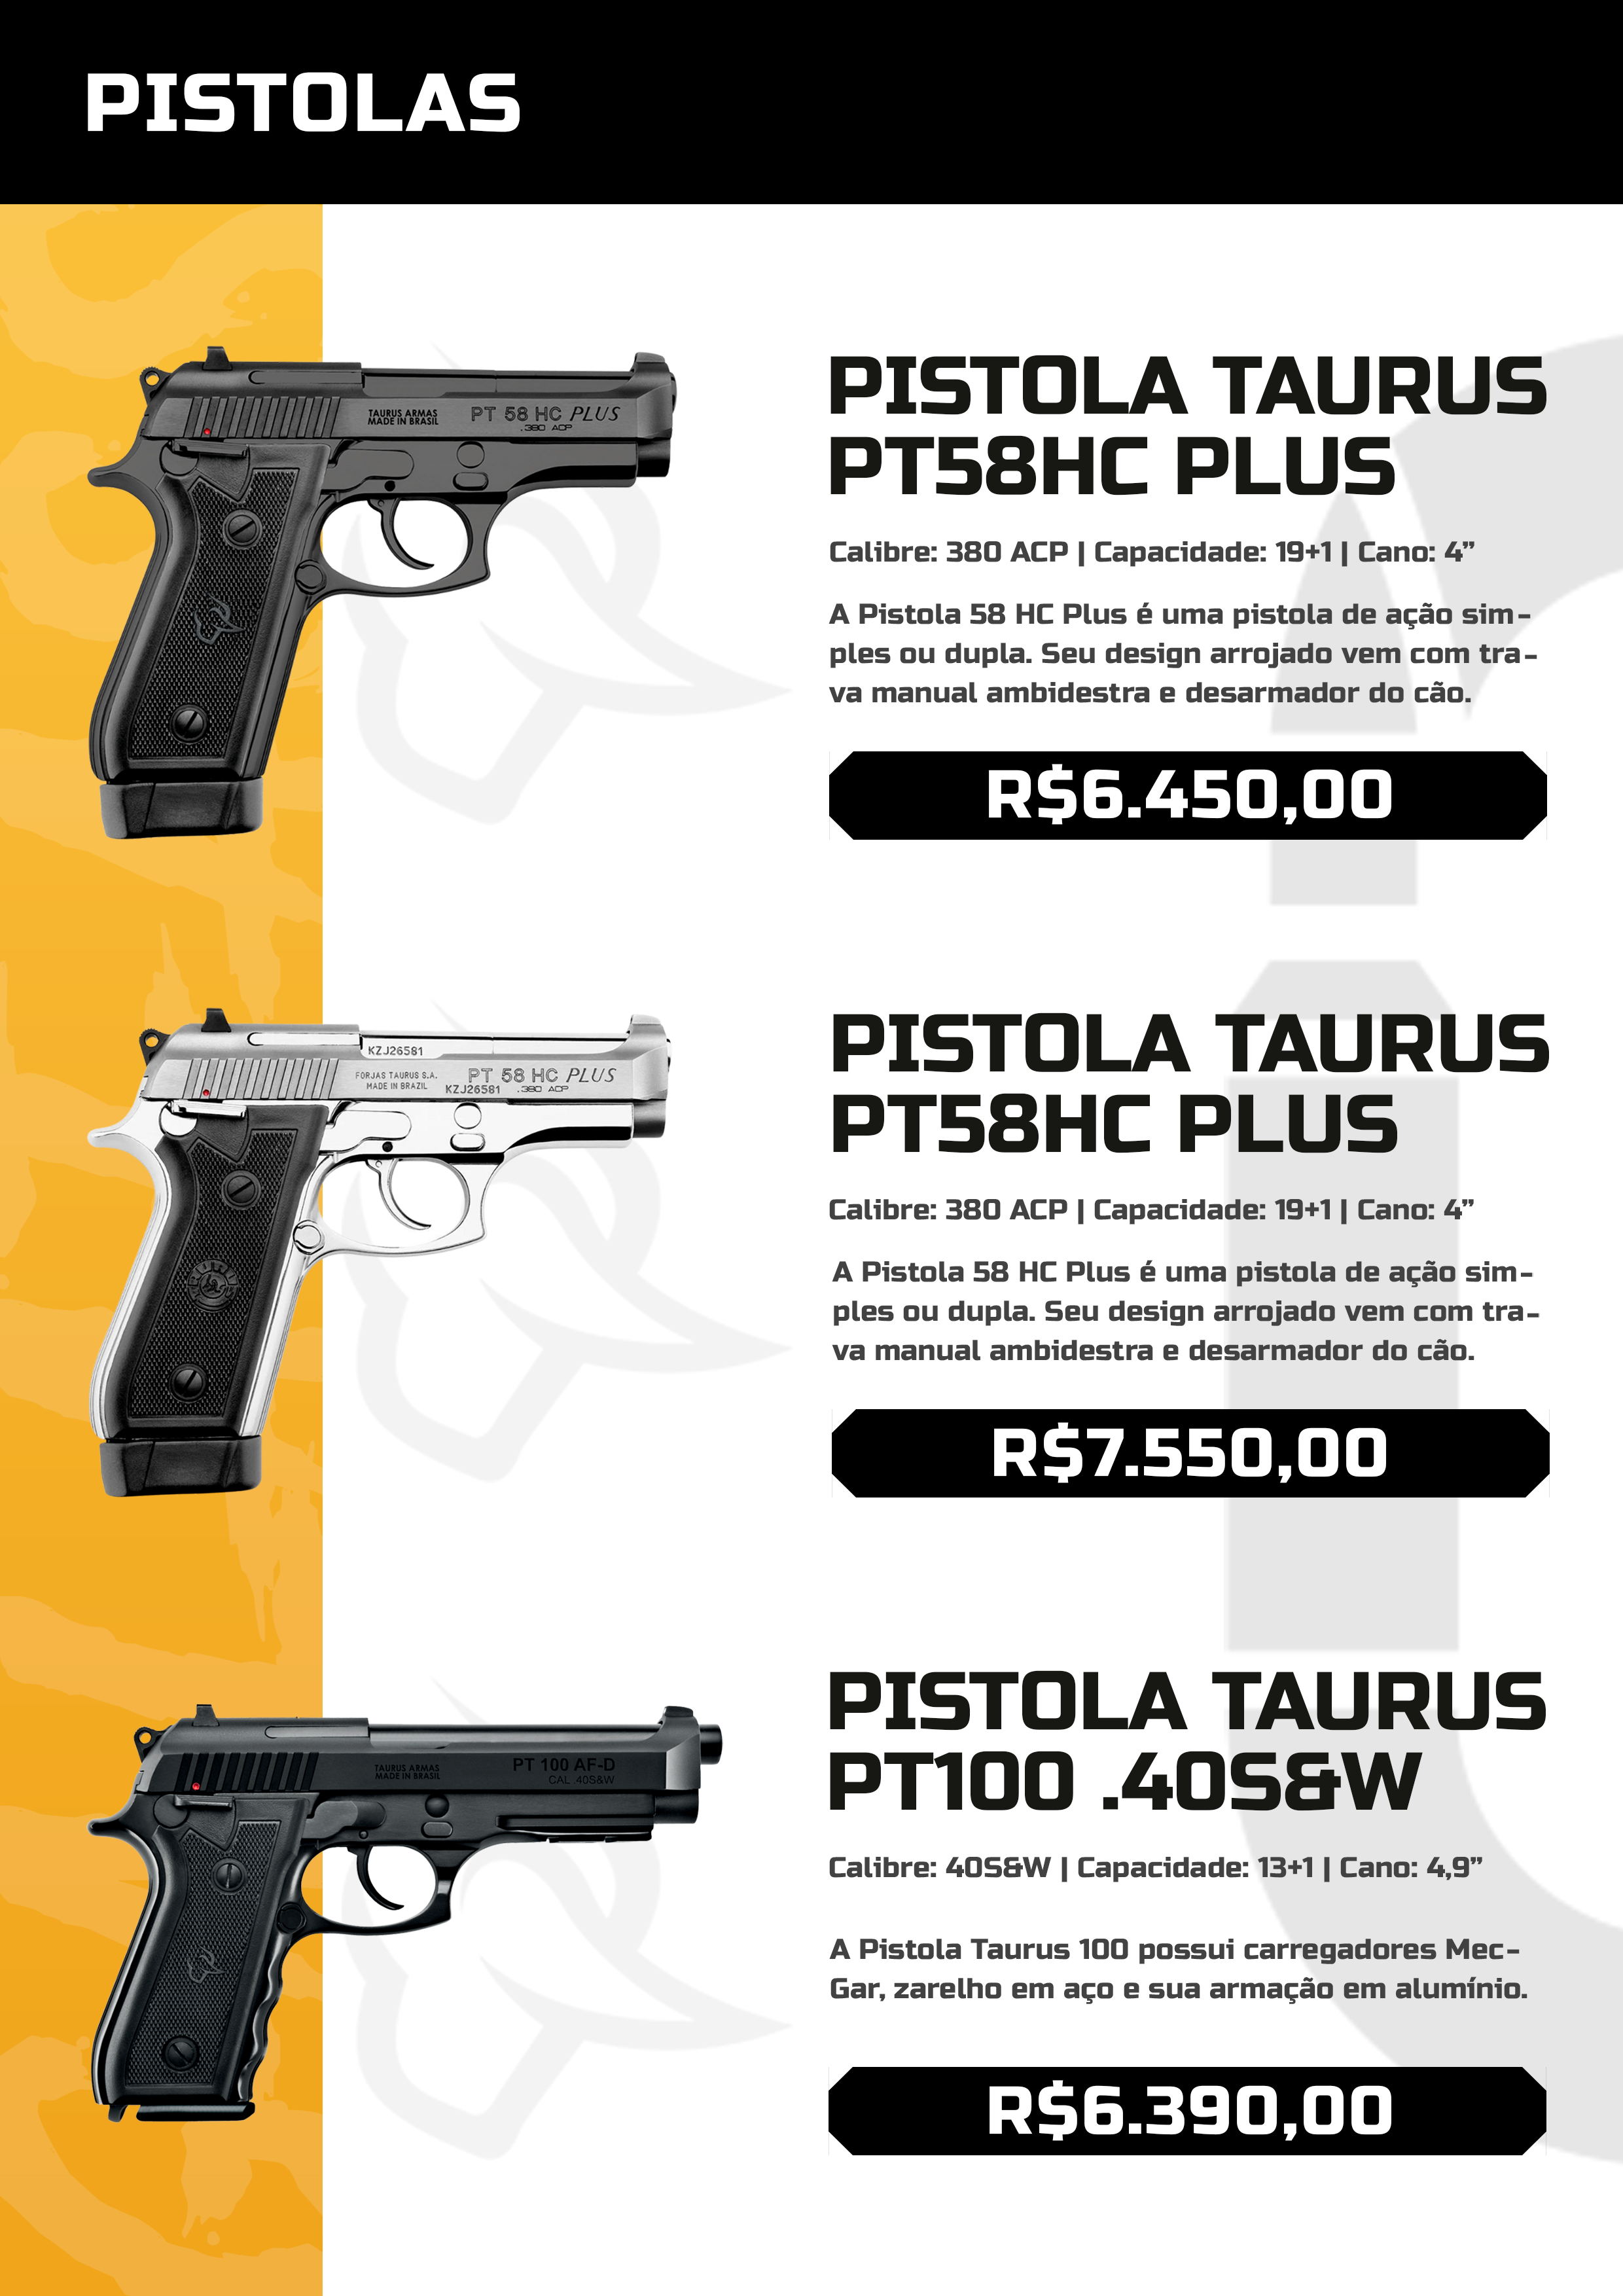 Pistola Taurus PT 59S Cal 380 ACP 19+1 Tiros - Cano 4,9 - Inox Fosco